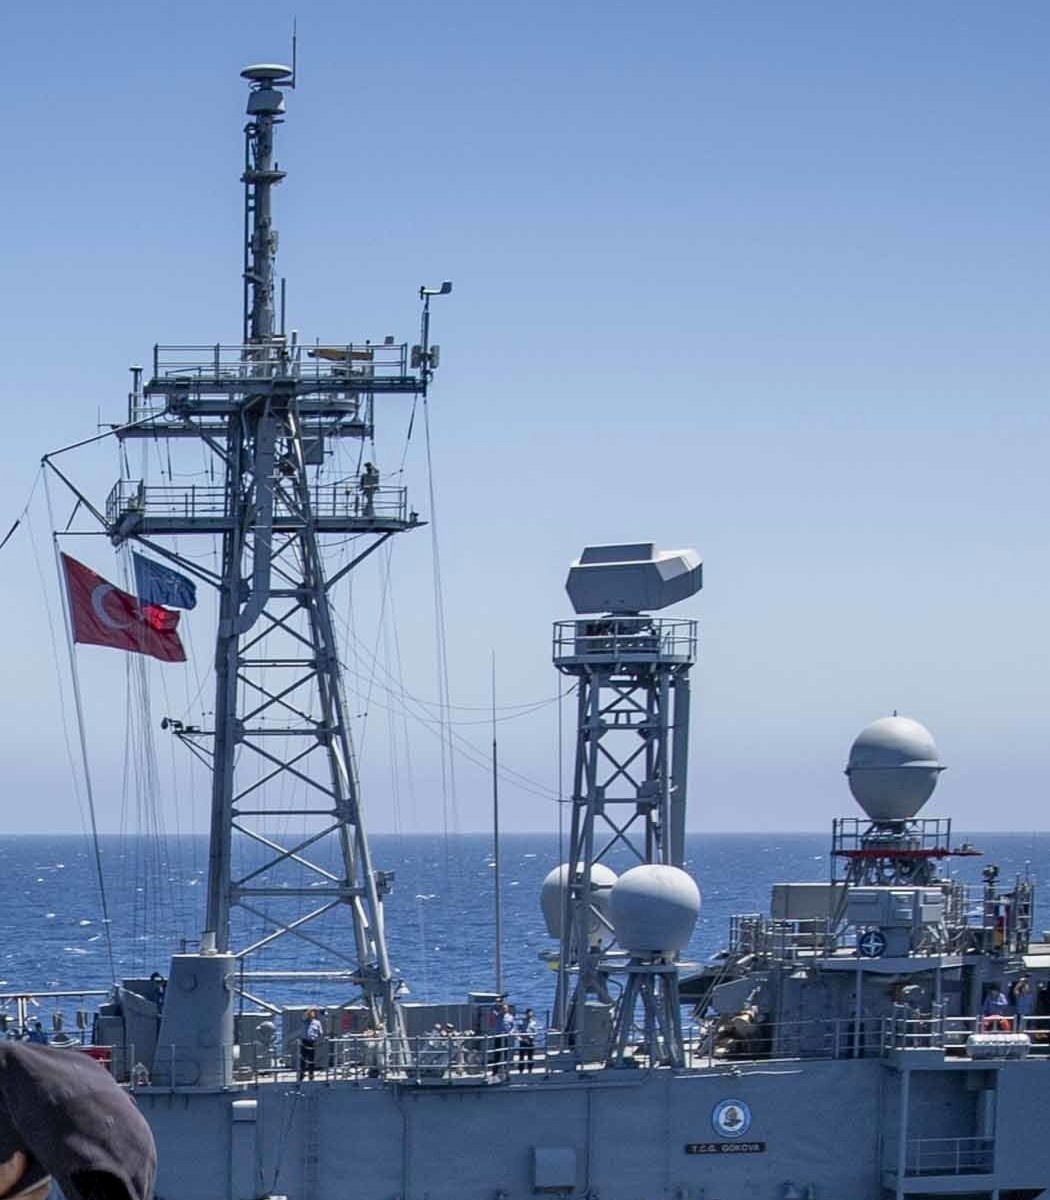 f-496 tcg gokova gabya g-class perry frigate ffg turkish navy türk deniz kuvvetleri 04c thales smart-s radar